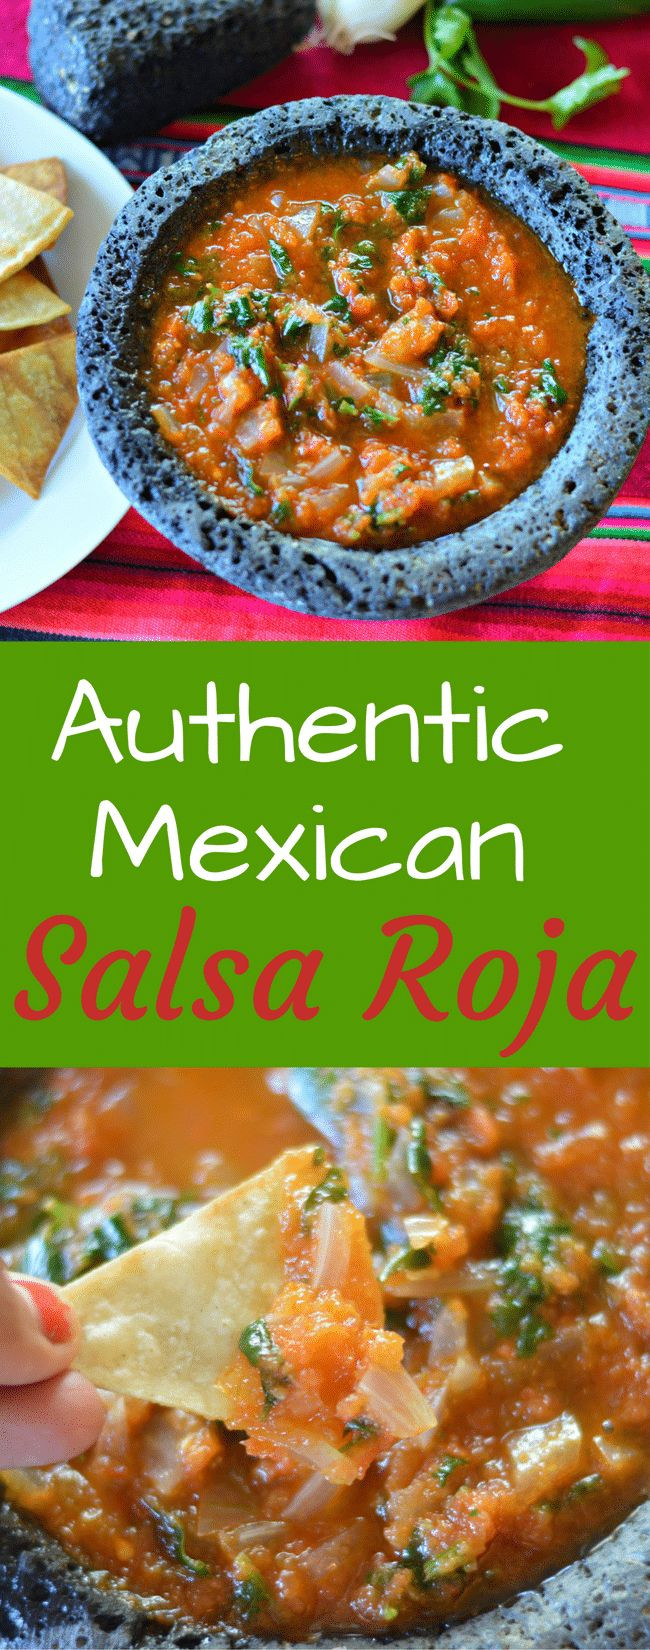 Authentic Mexican Salsas Recipes
 De 25 bedste idéer inden for Salsa roja på Pinterest